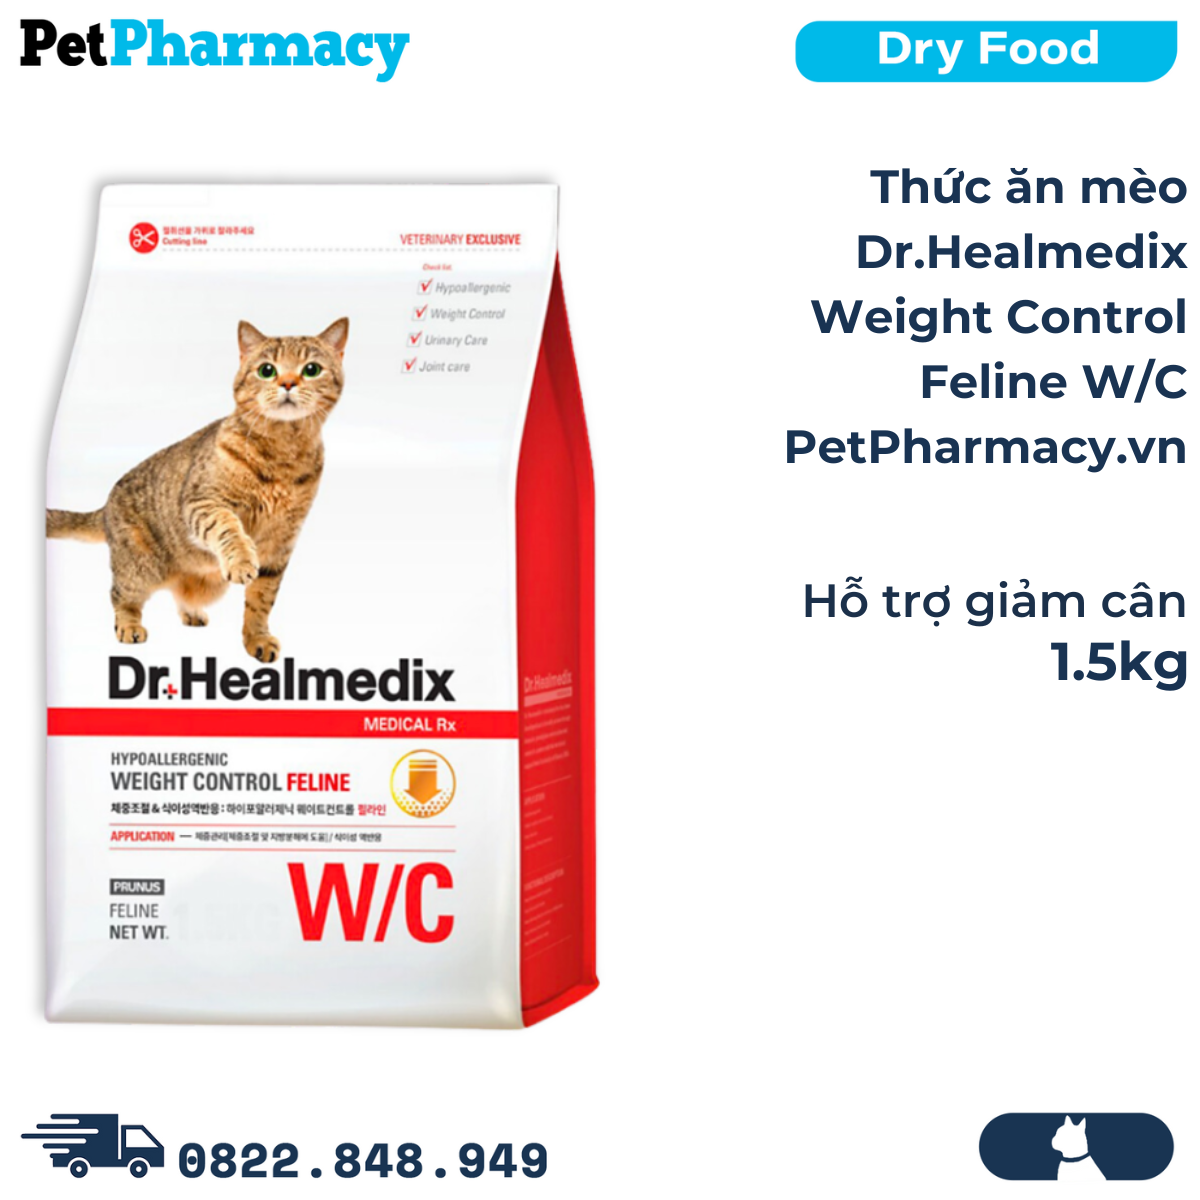  Thức ăn mèo Dr.Healmedix Weight Control Feline W/C 1.5kg - Hỗ trợ giảm cân 